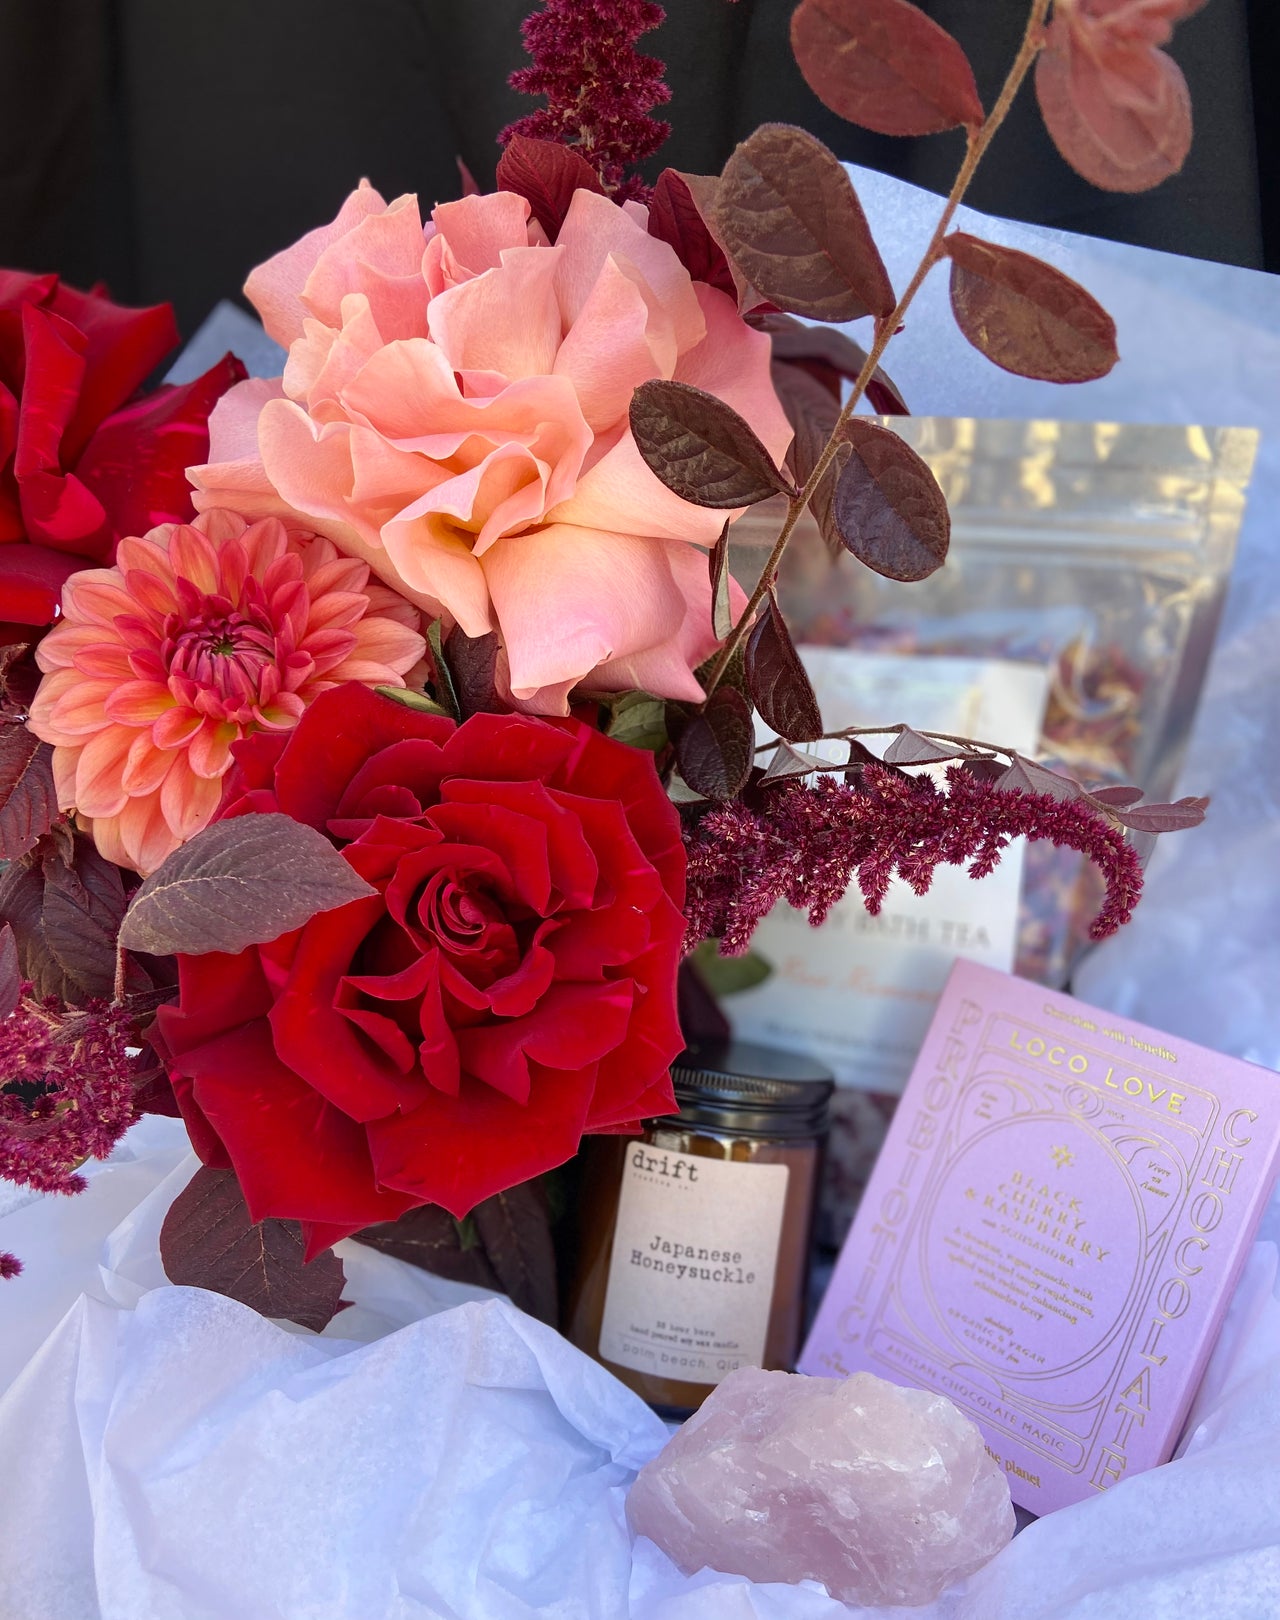 The Lovers - gift box No. 2 - Haven Botanical - Loco Love Chocolates - Drift and Co candle - Byron Bath Organics Rose Bath Tea